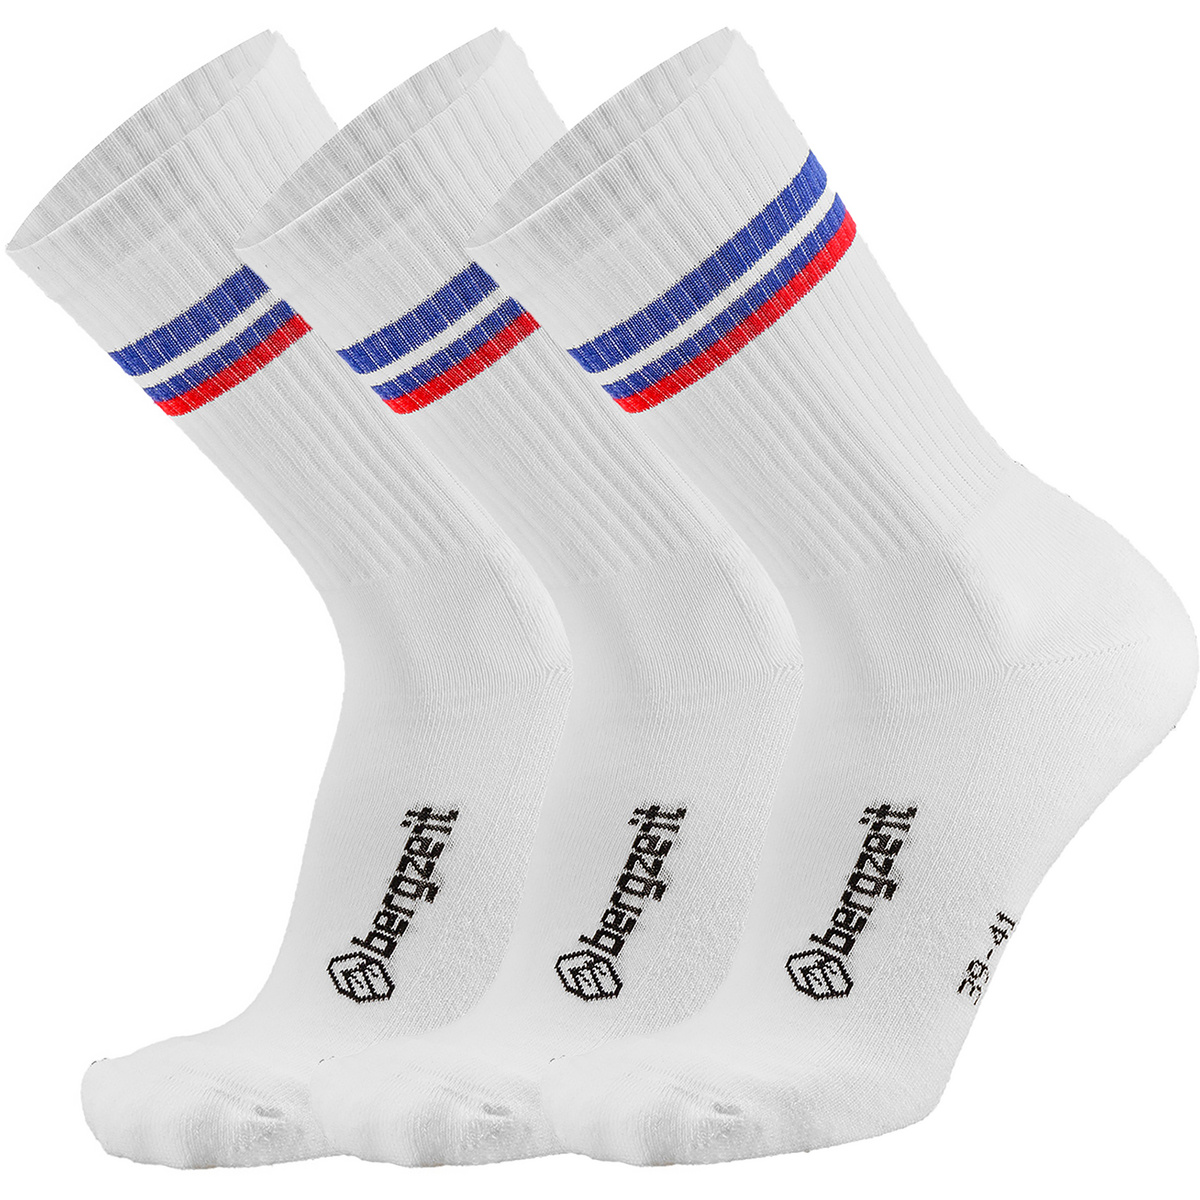 Bergzeit Basics Bergzeit Retro 3er Pack Socken